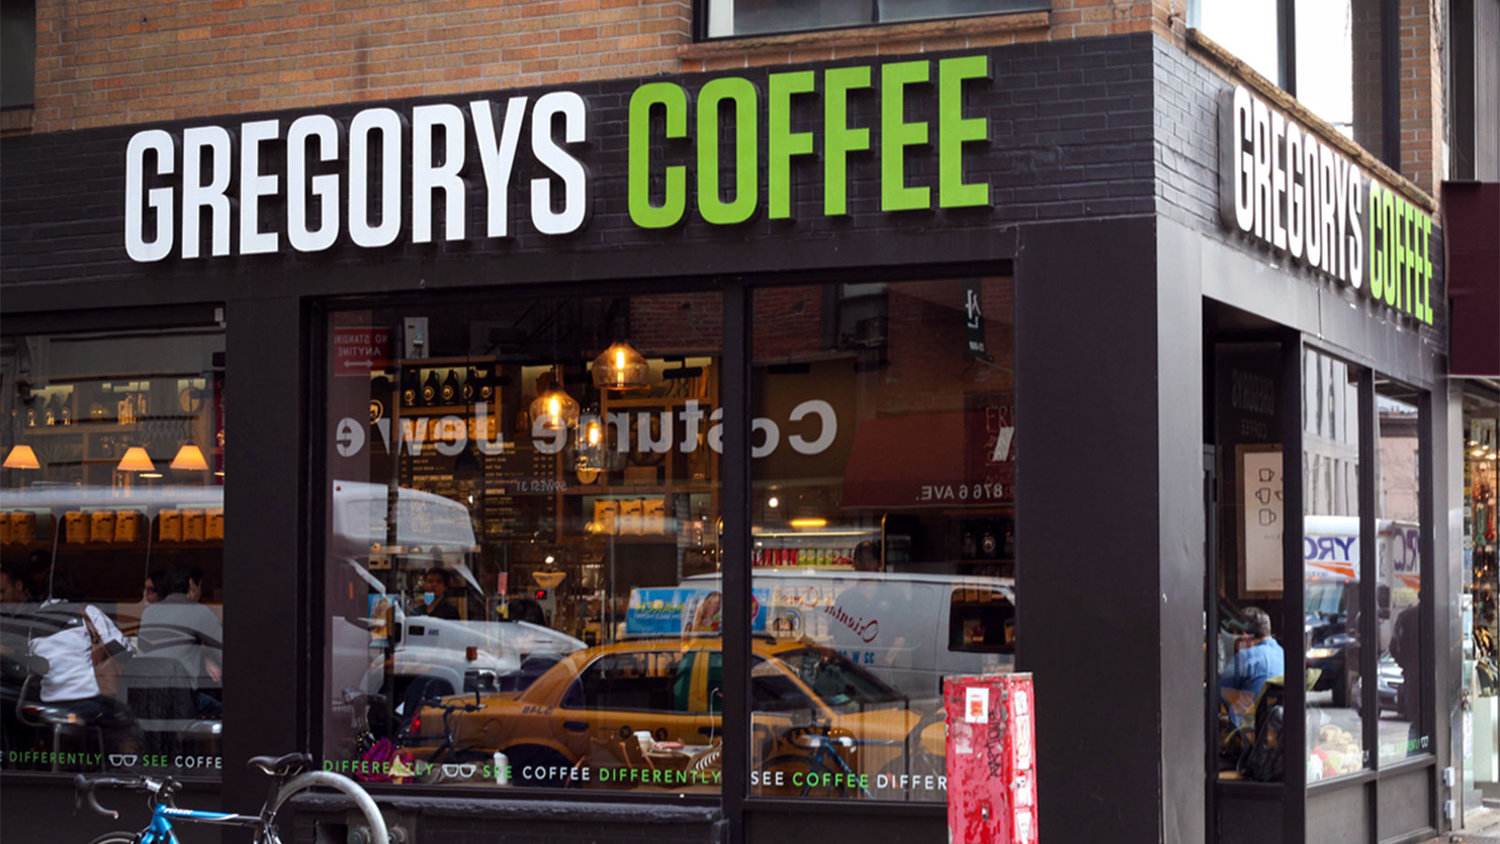 Exterior of Gregorys Coffee shop